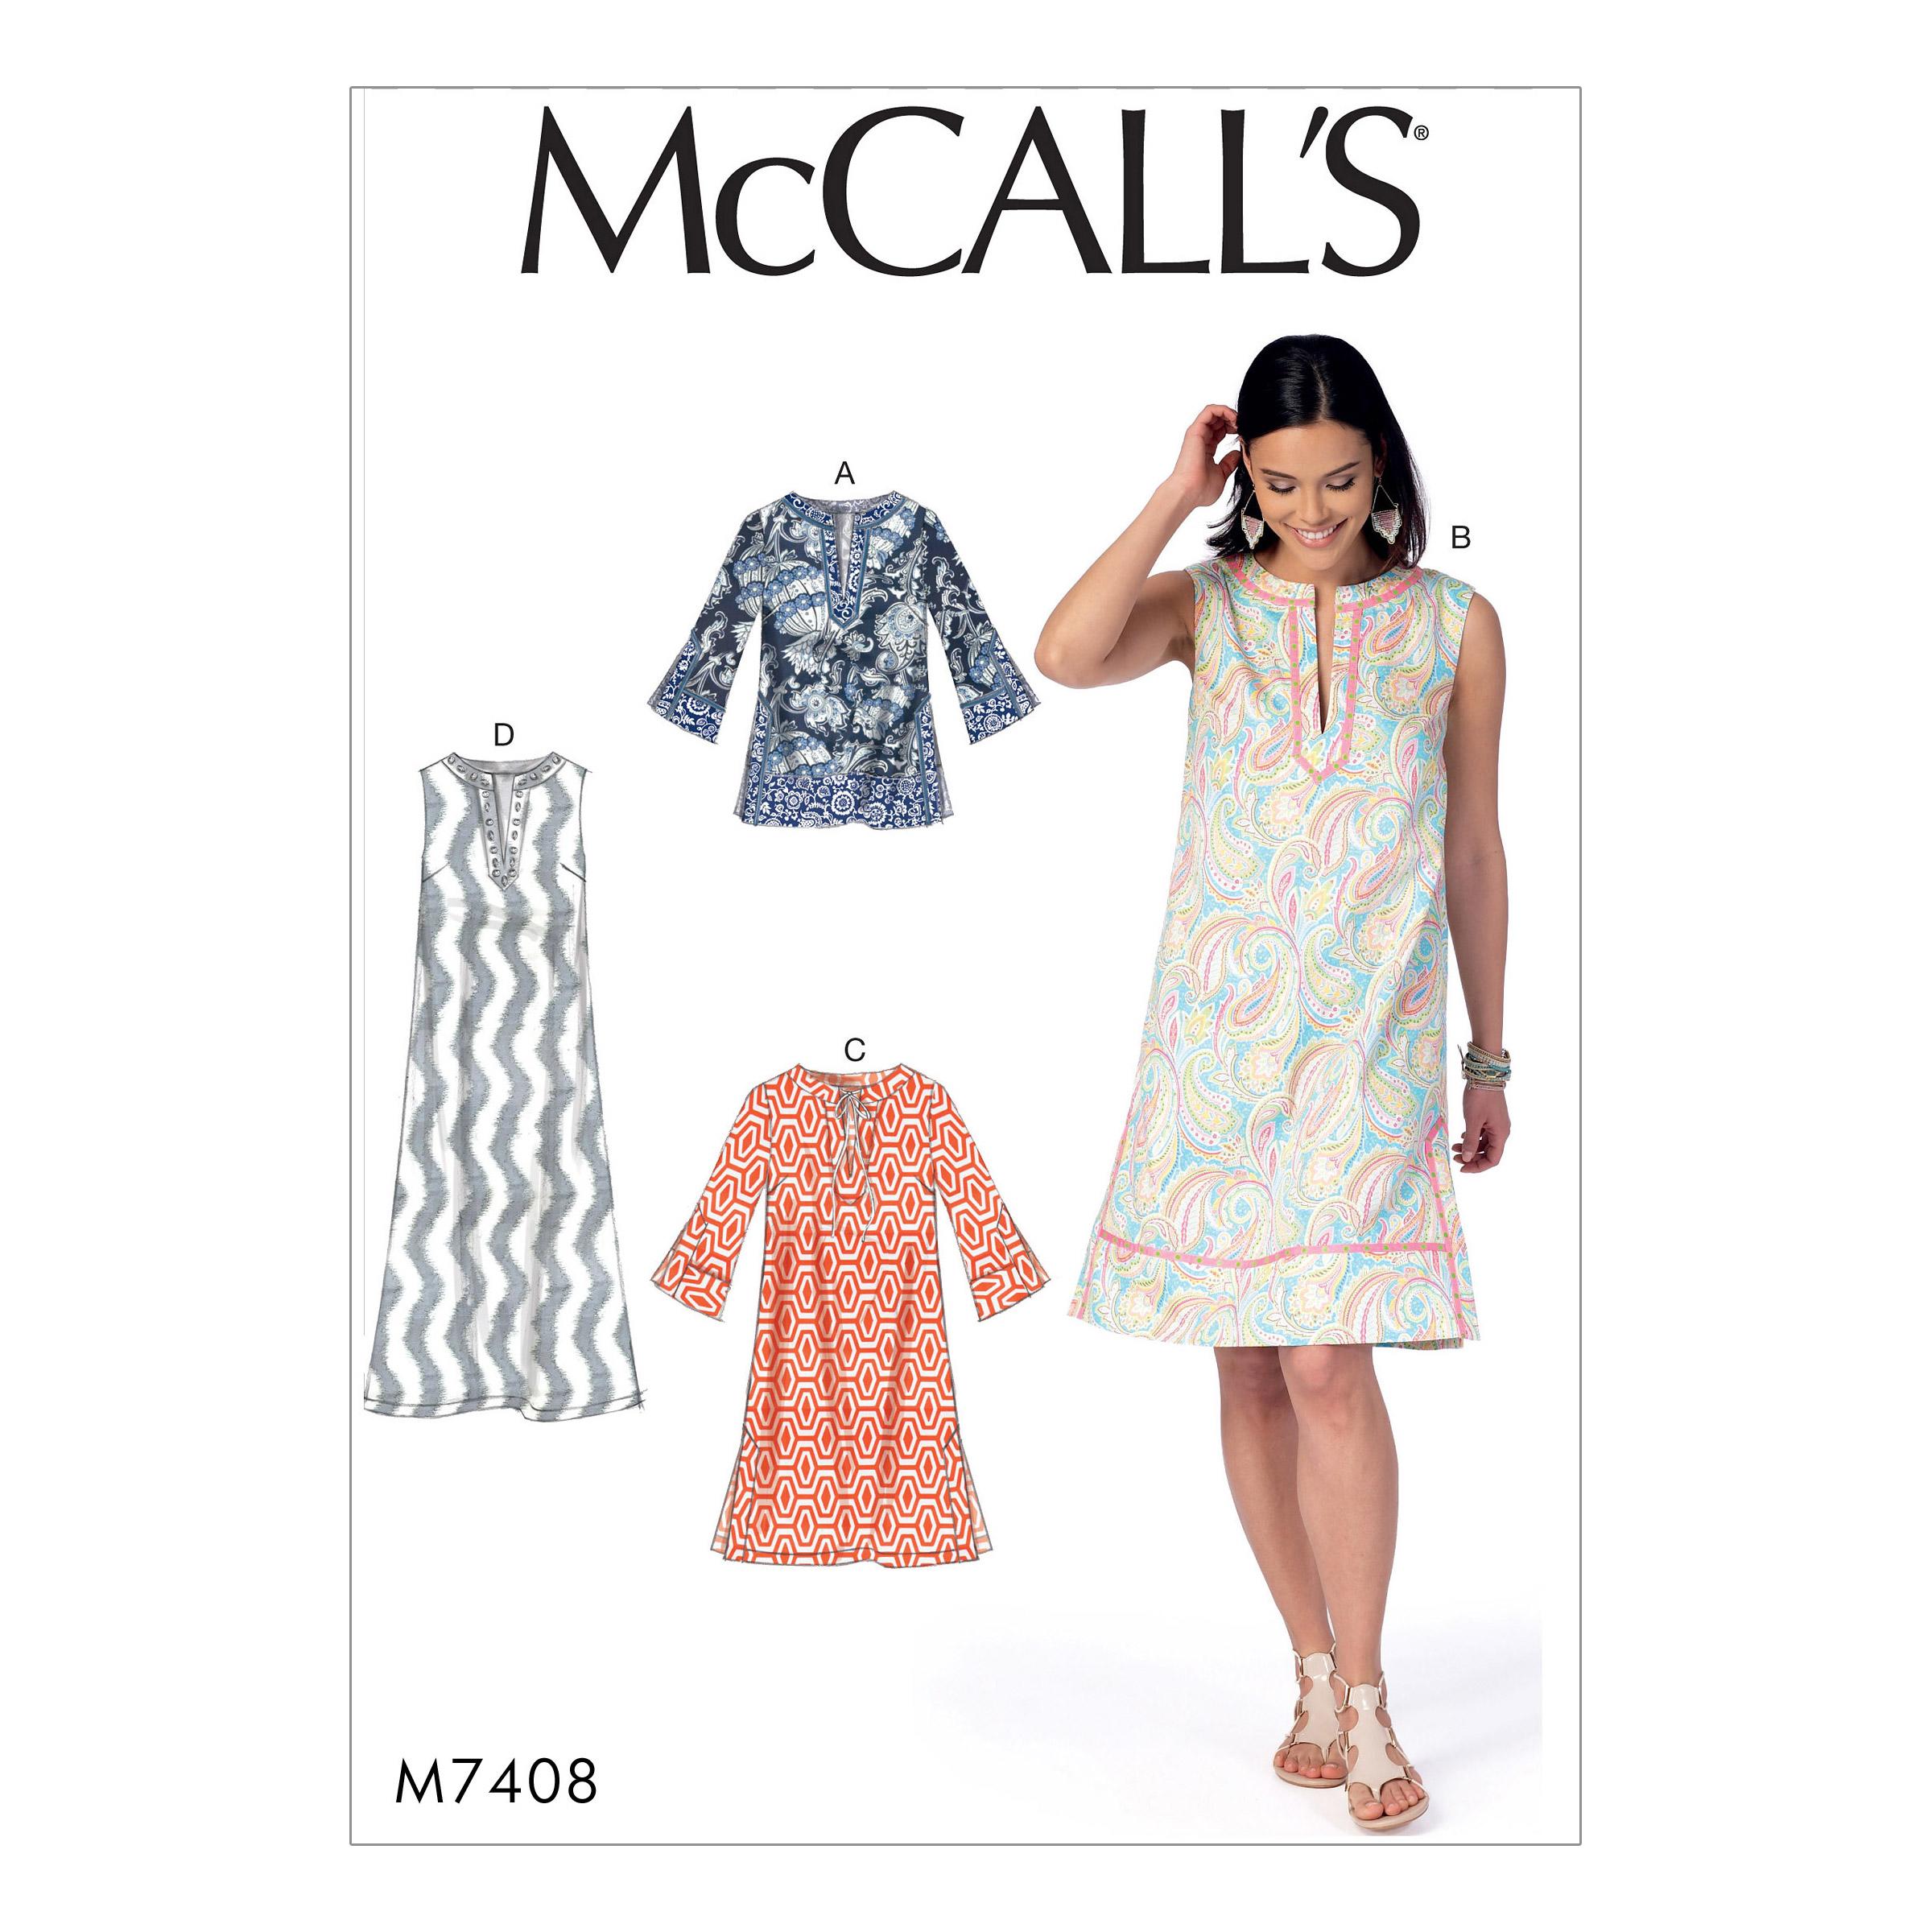 McCalls M7408 Misses Dresses, Misses Tops